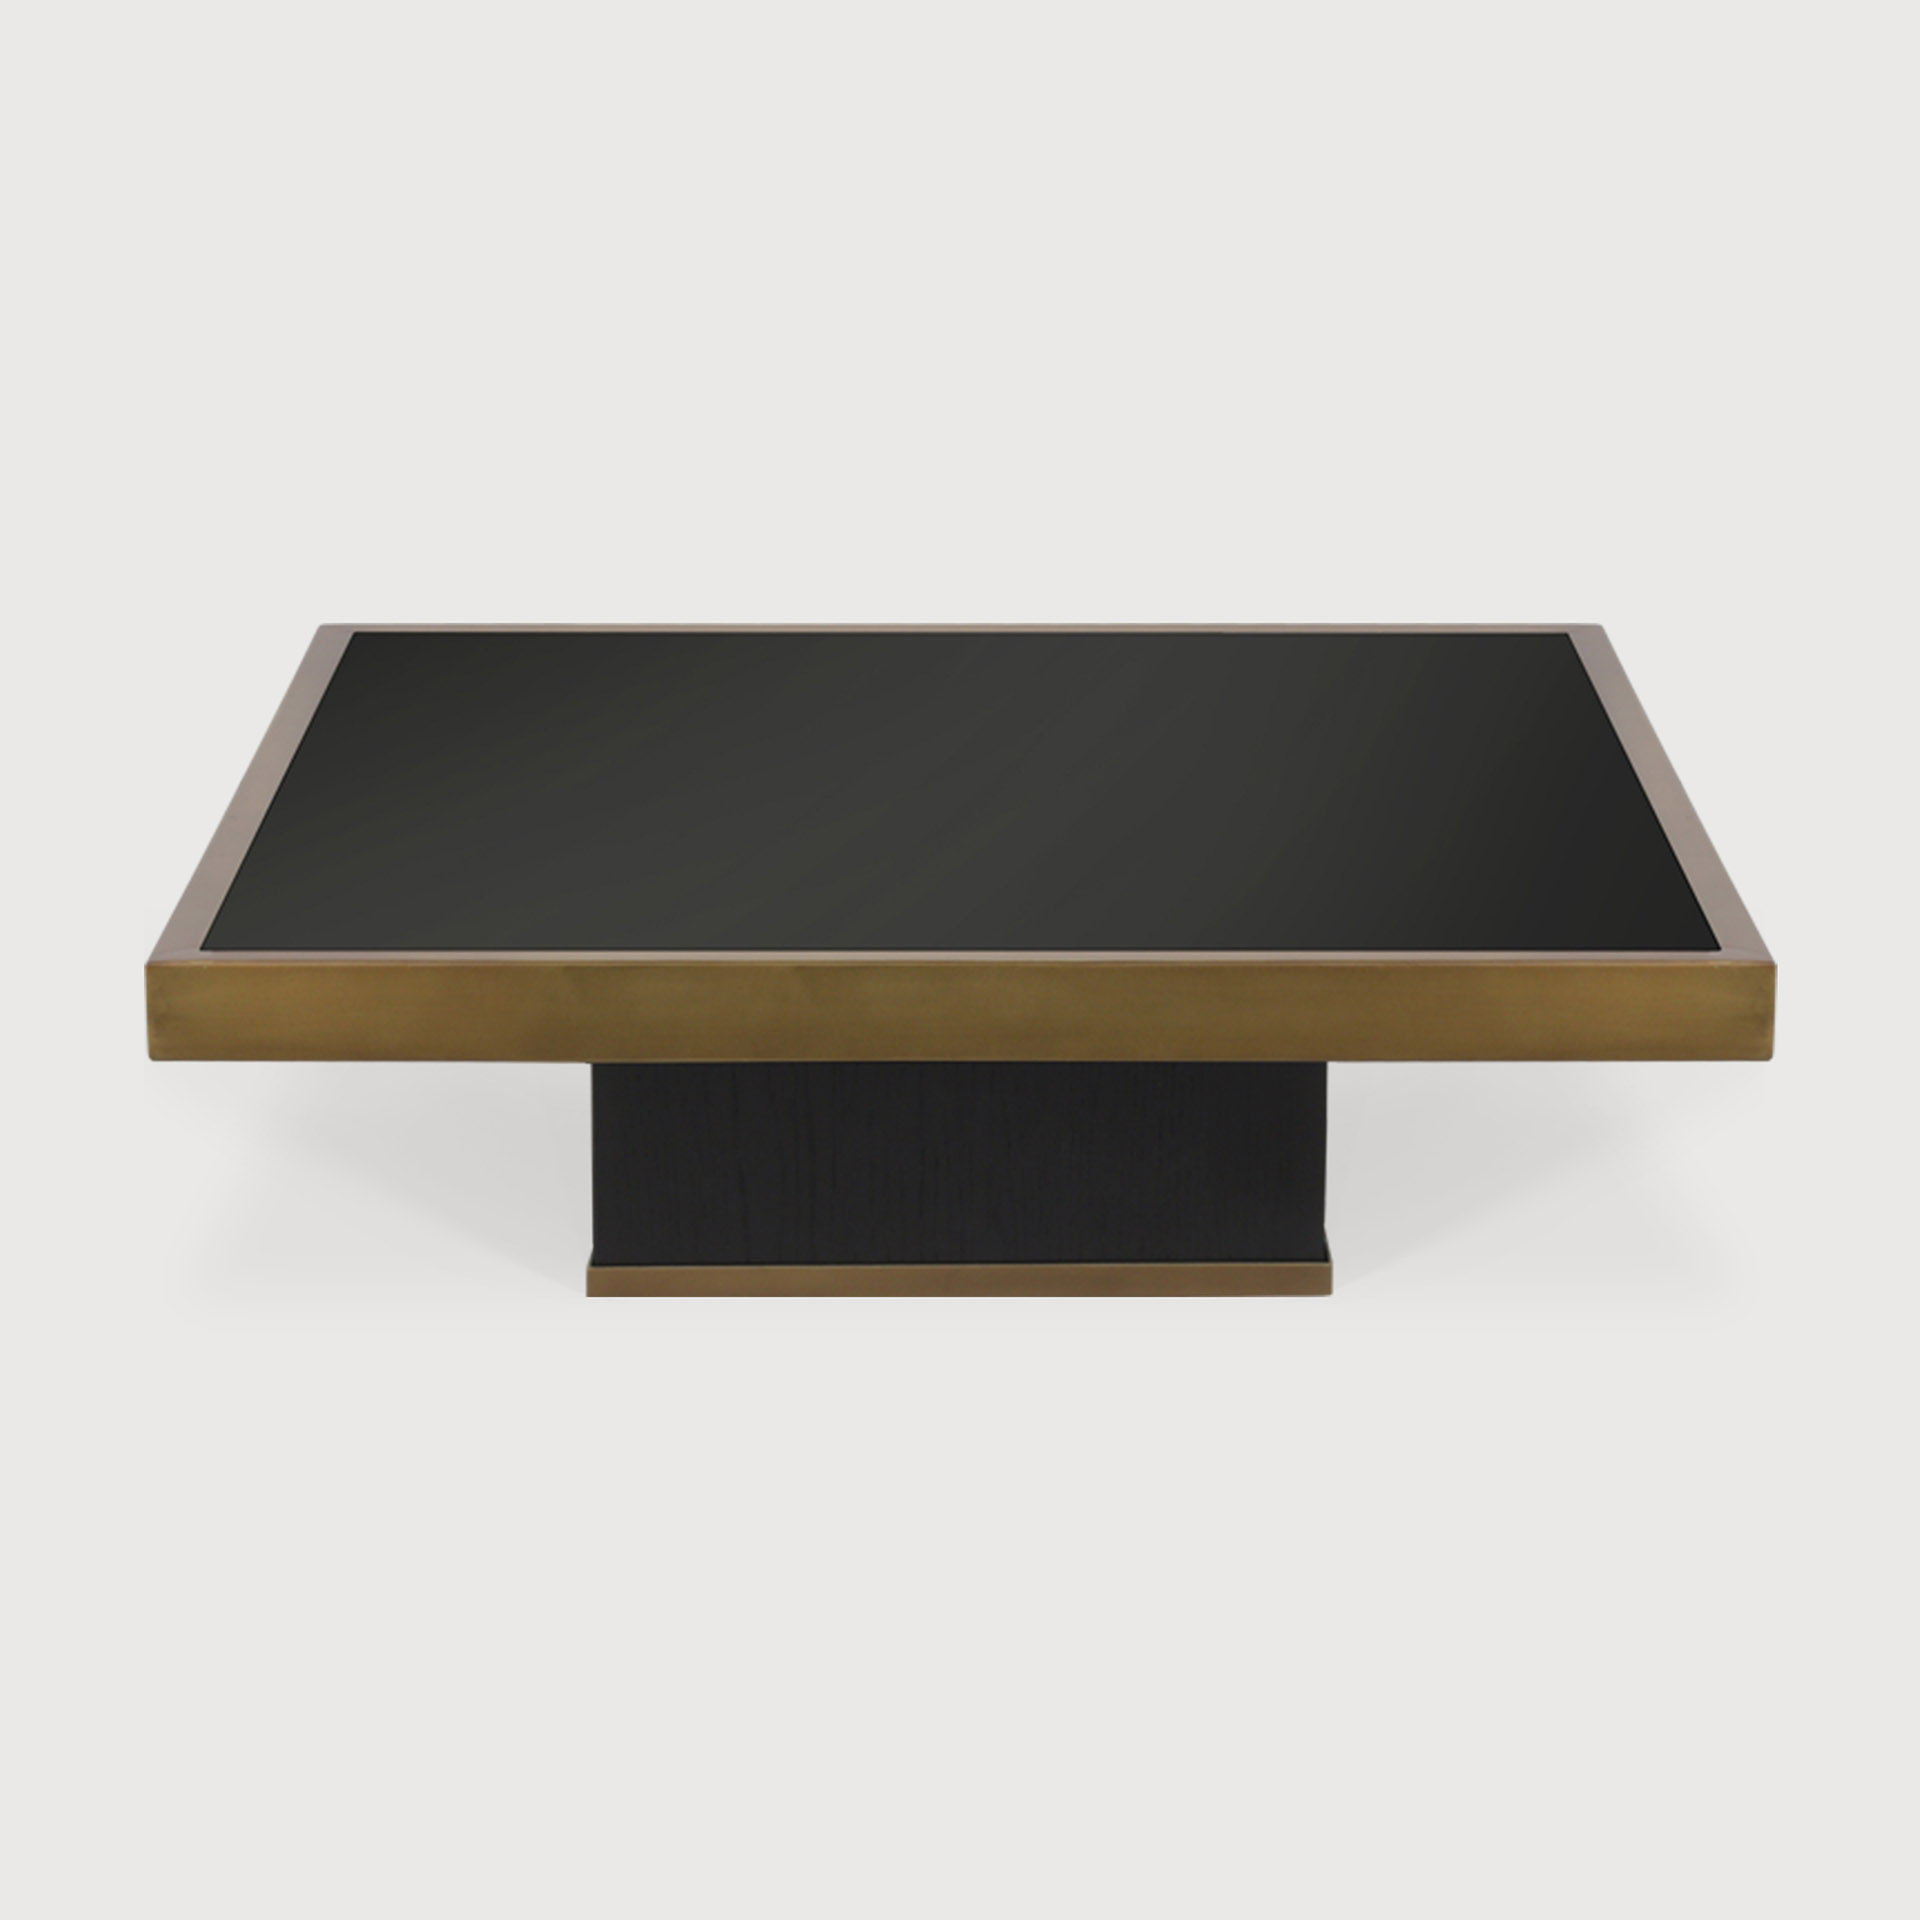 [20785*] Trifecta coffee table (61x61x23cm)